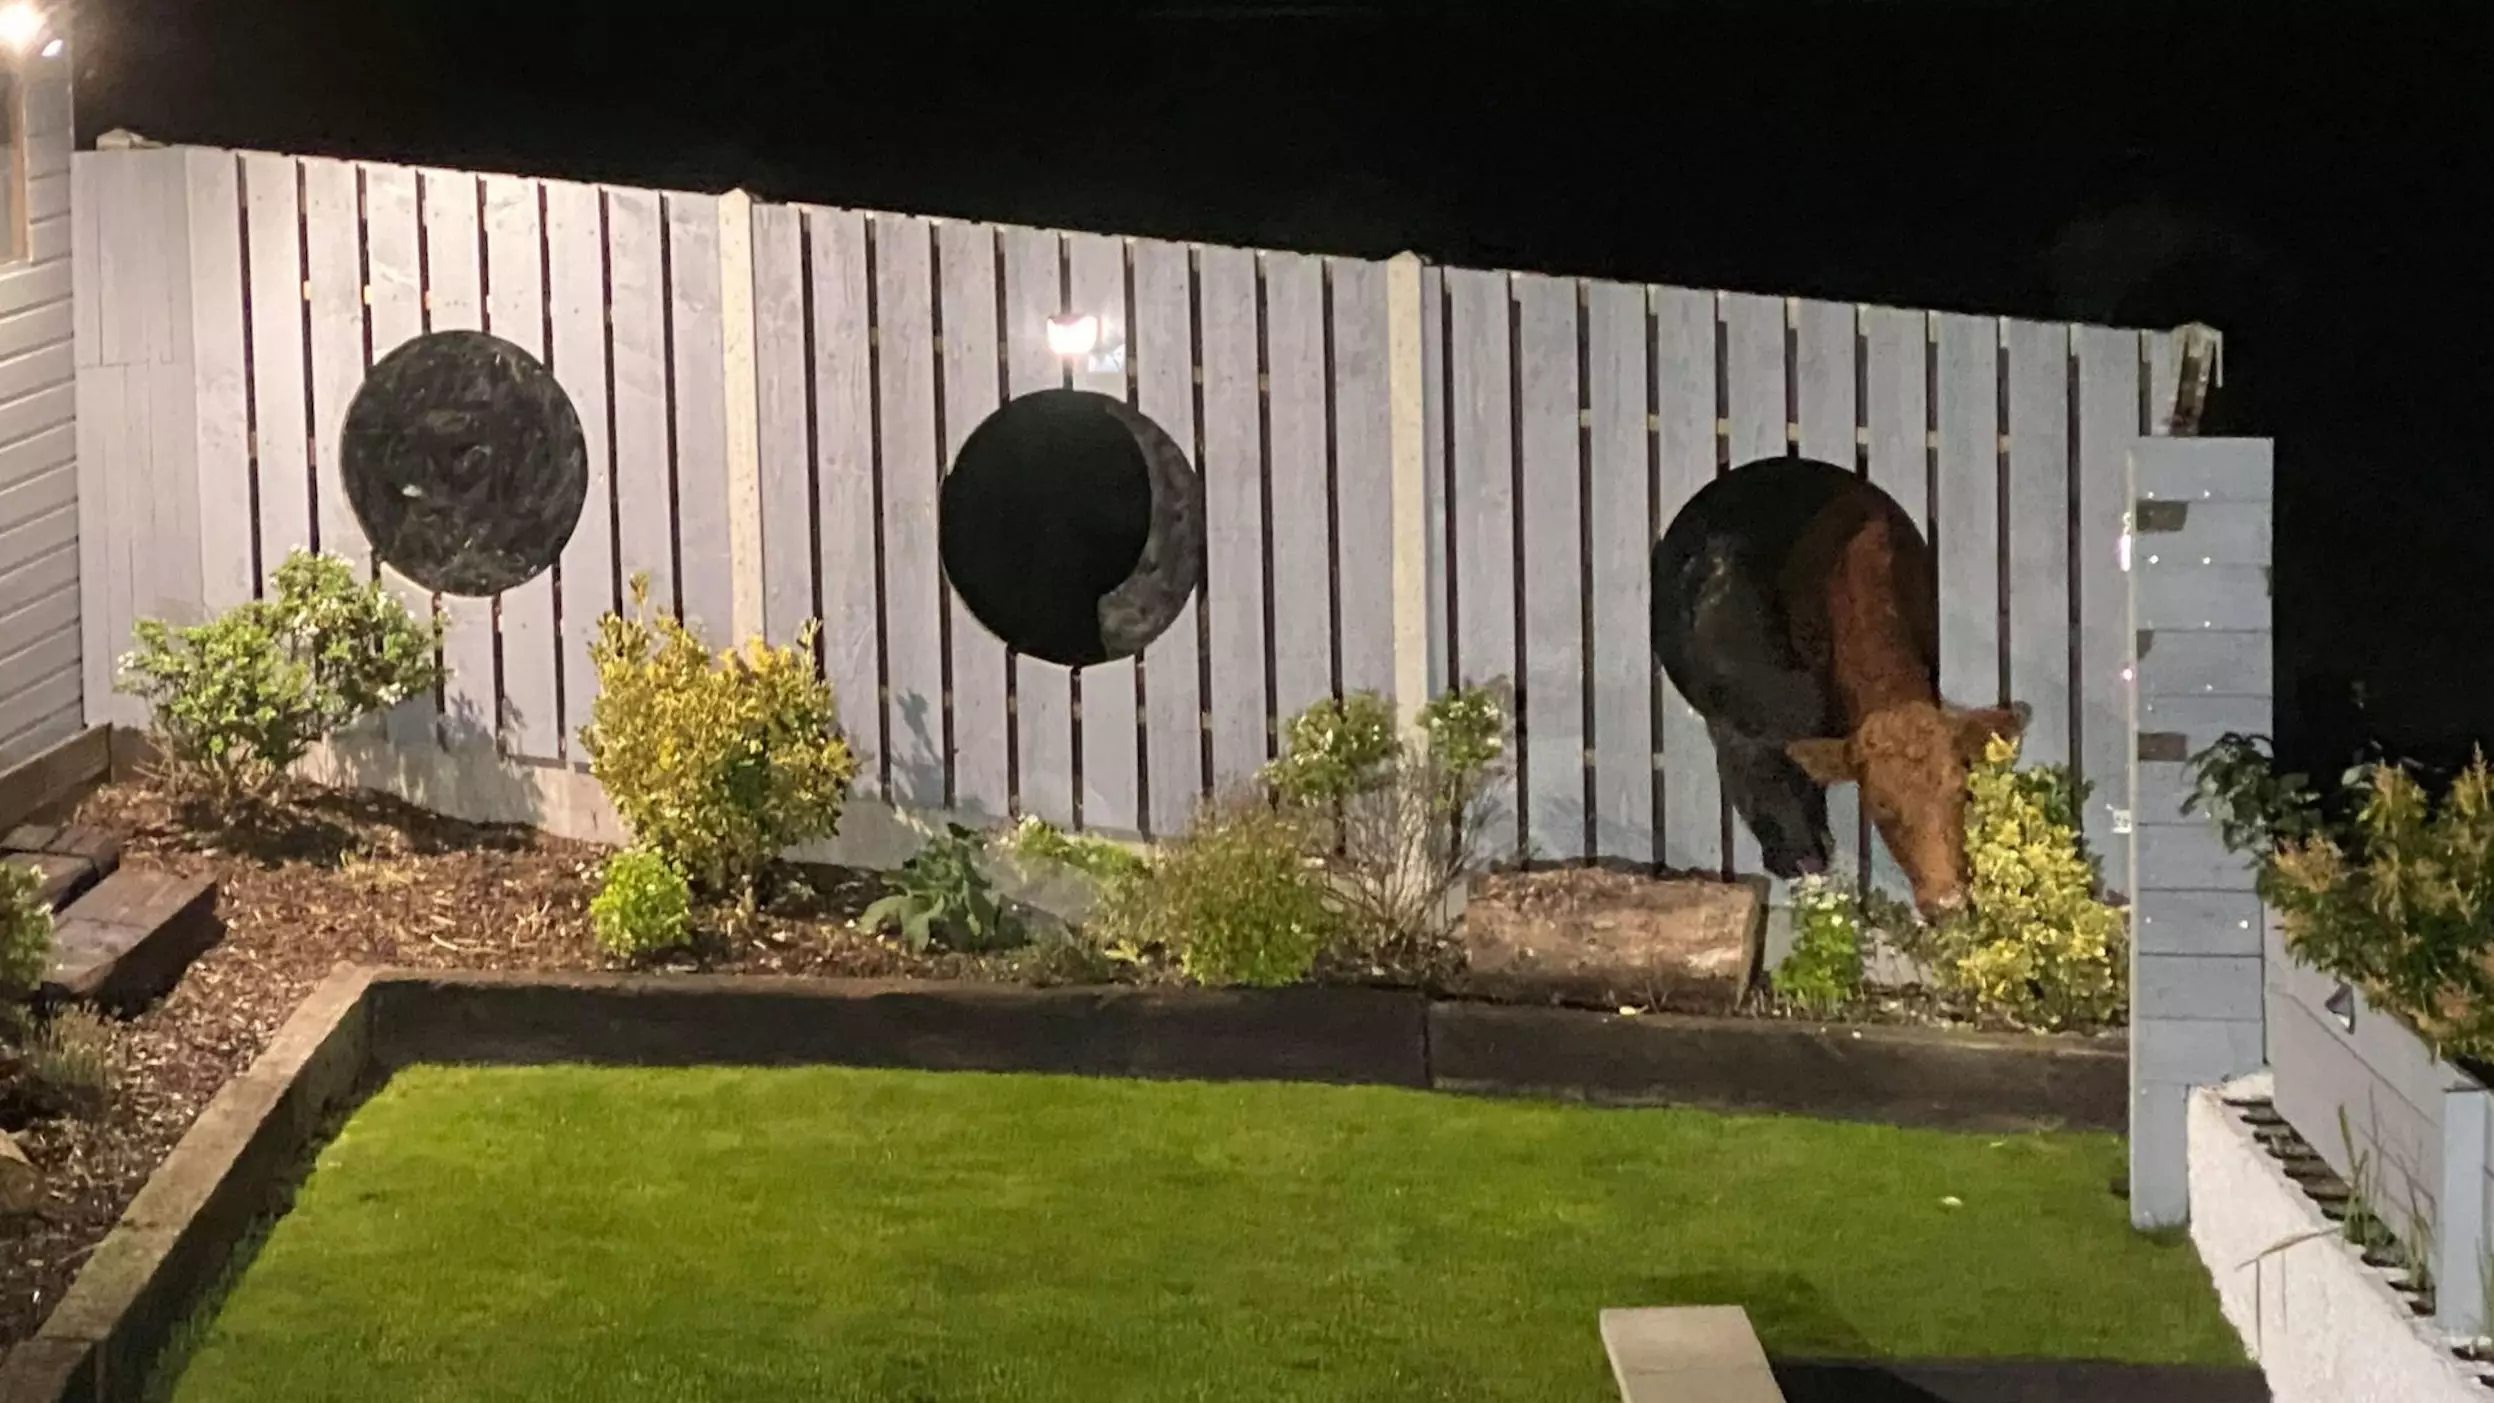 Cows Break Through Dad's Garden Fence Windows To Munch On His Plants